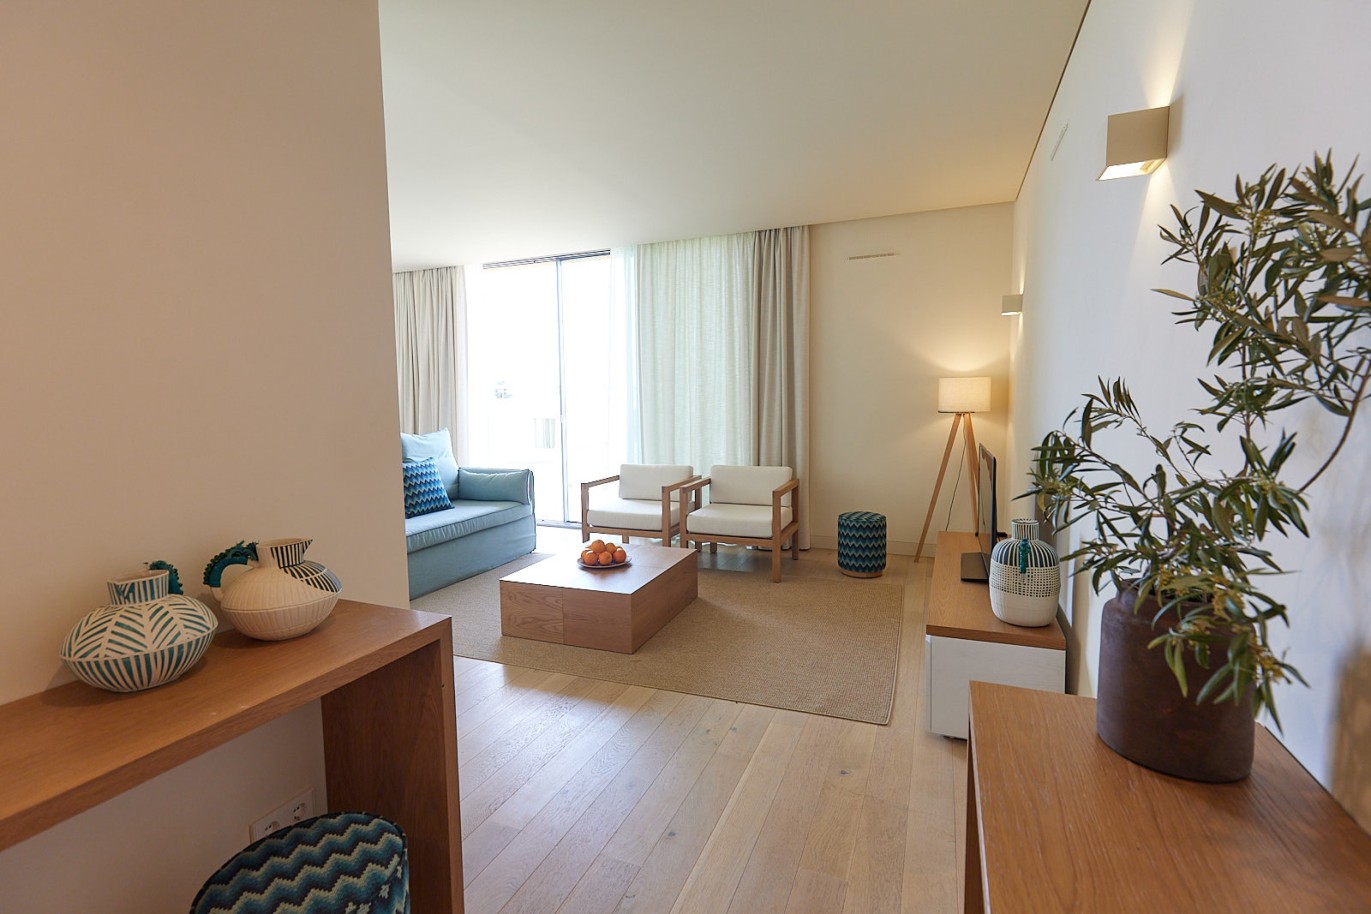 2 bedroom apartment in resort, for sale in Porches, Algarve_228948